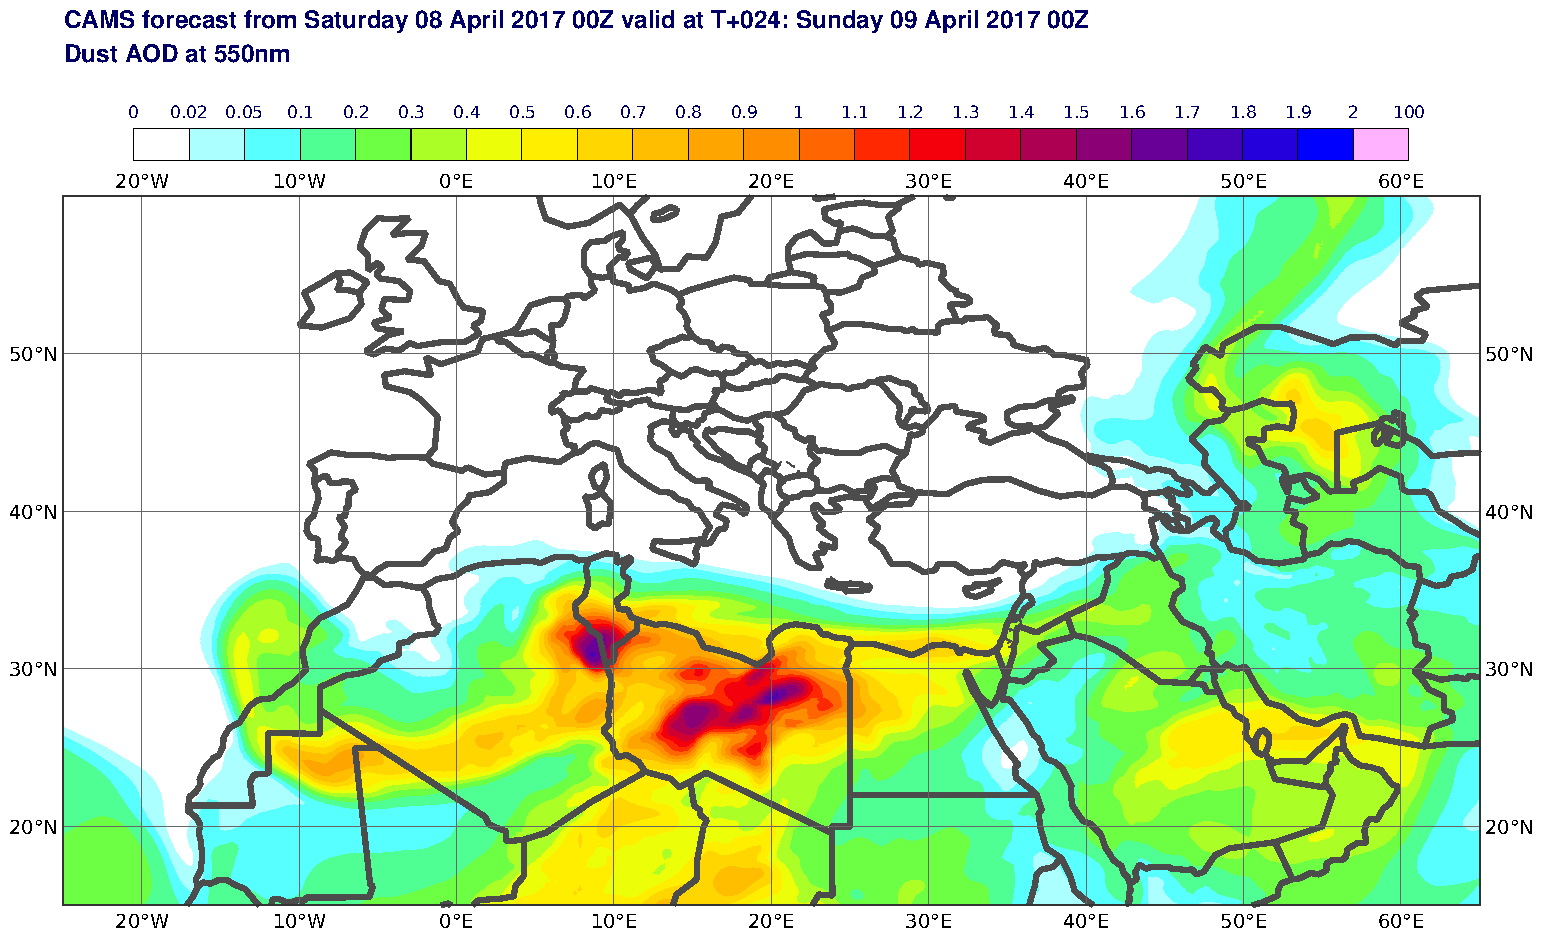 Dust AOD at 550nm valid at T24 - 2017-04-09 00:00